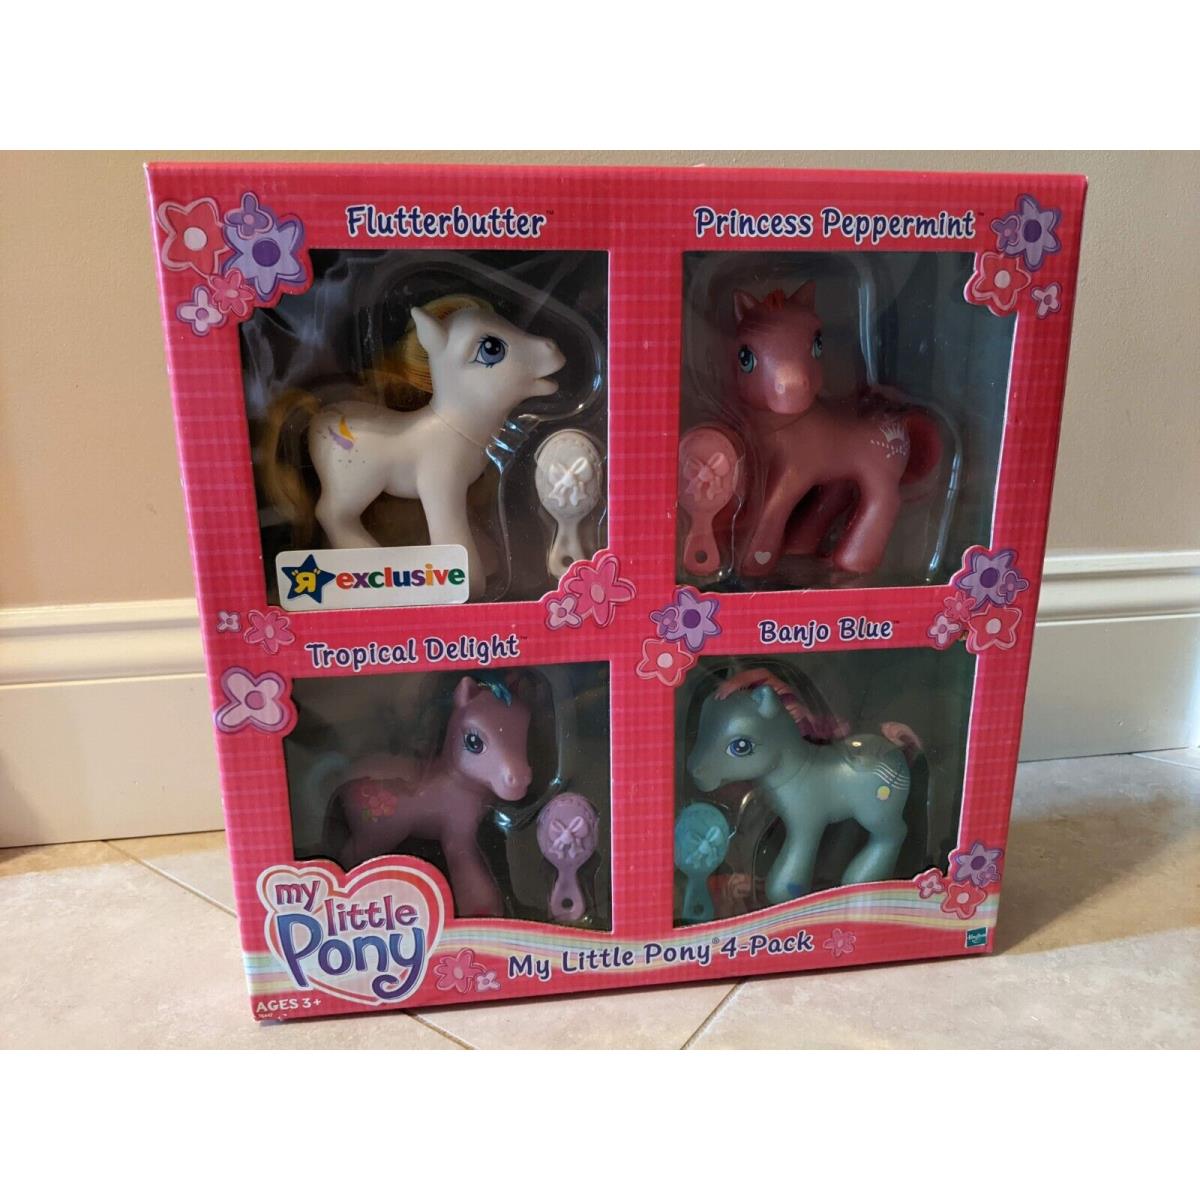 My Little Pony G3 - Toys R Us Exclusive 4-pack Flutterbutter / Banjo Blue ++